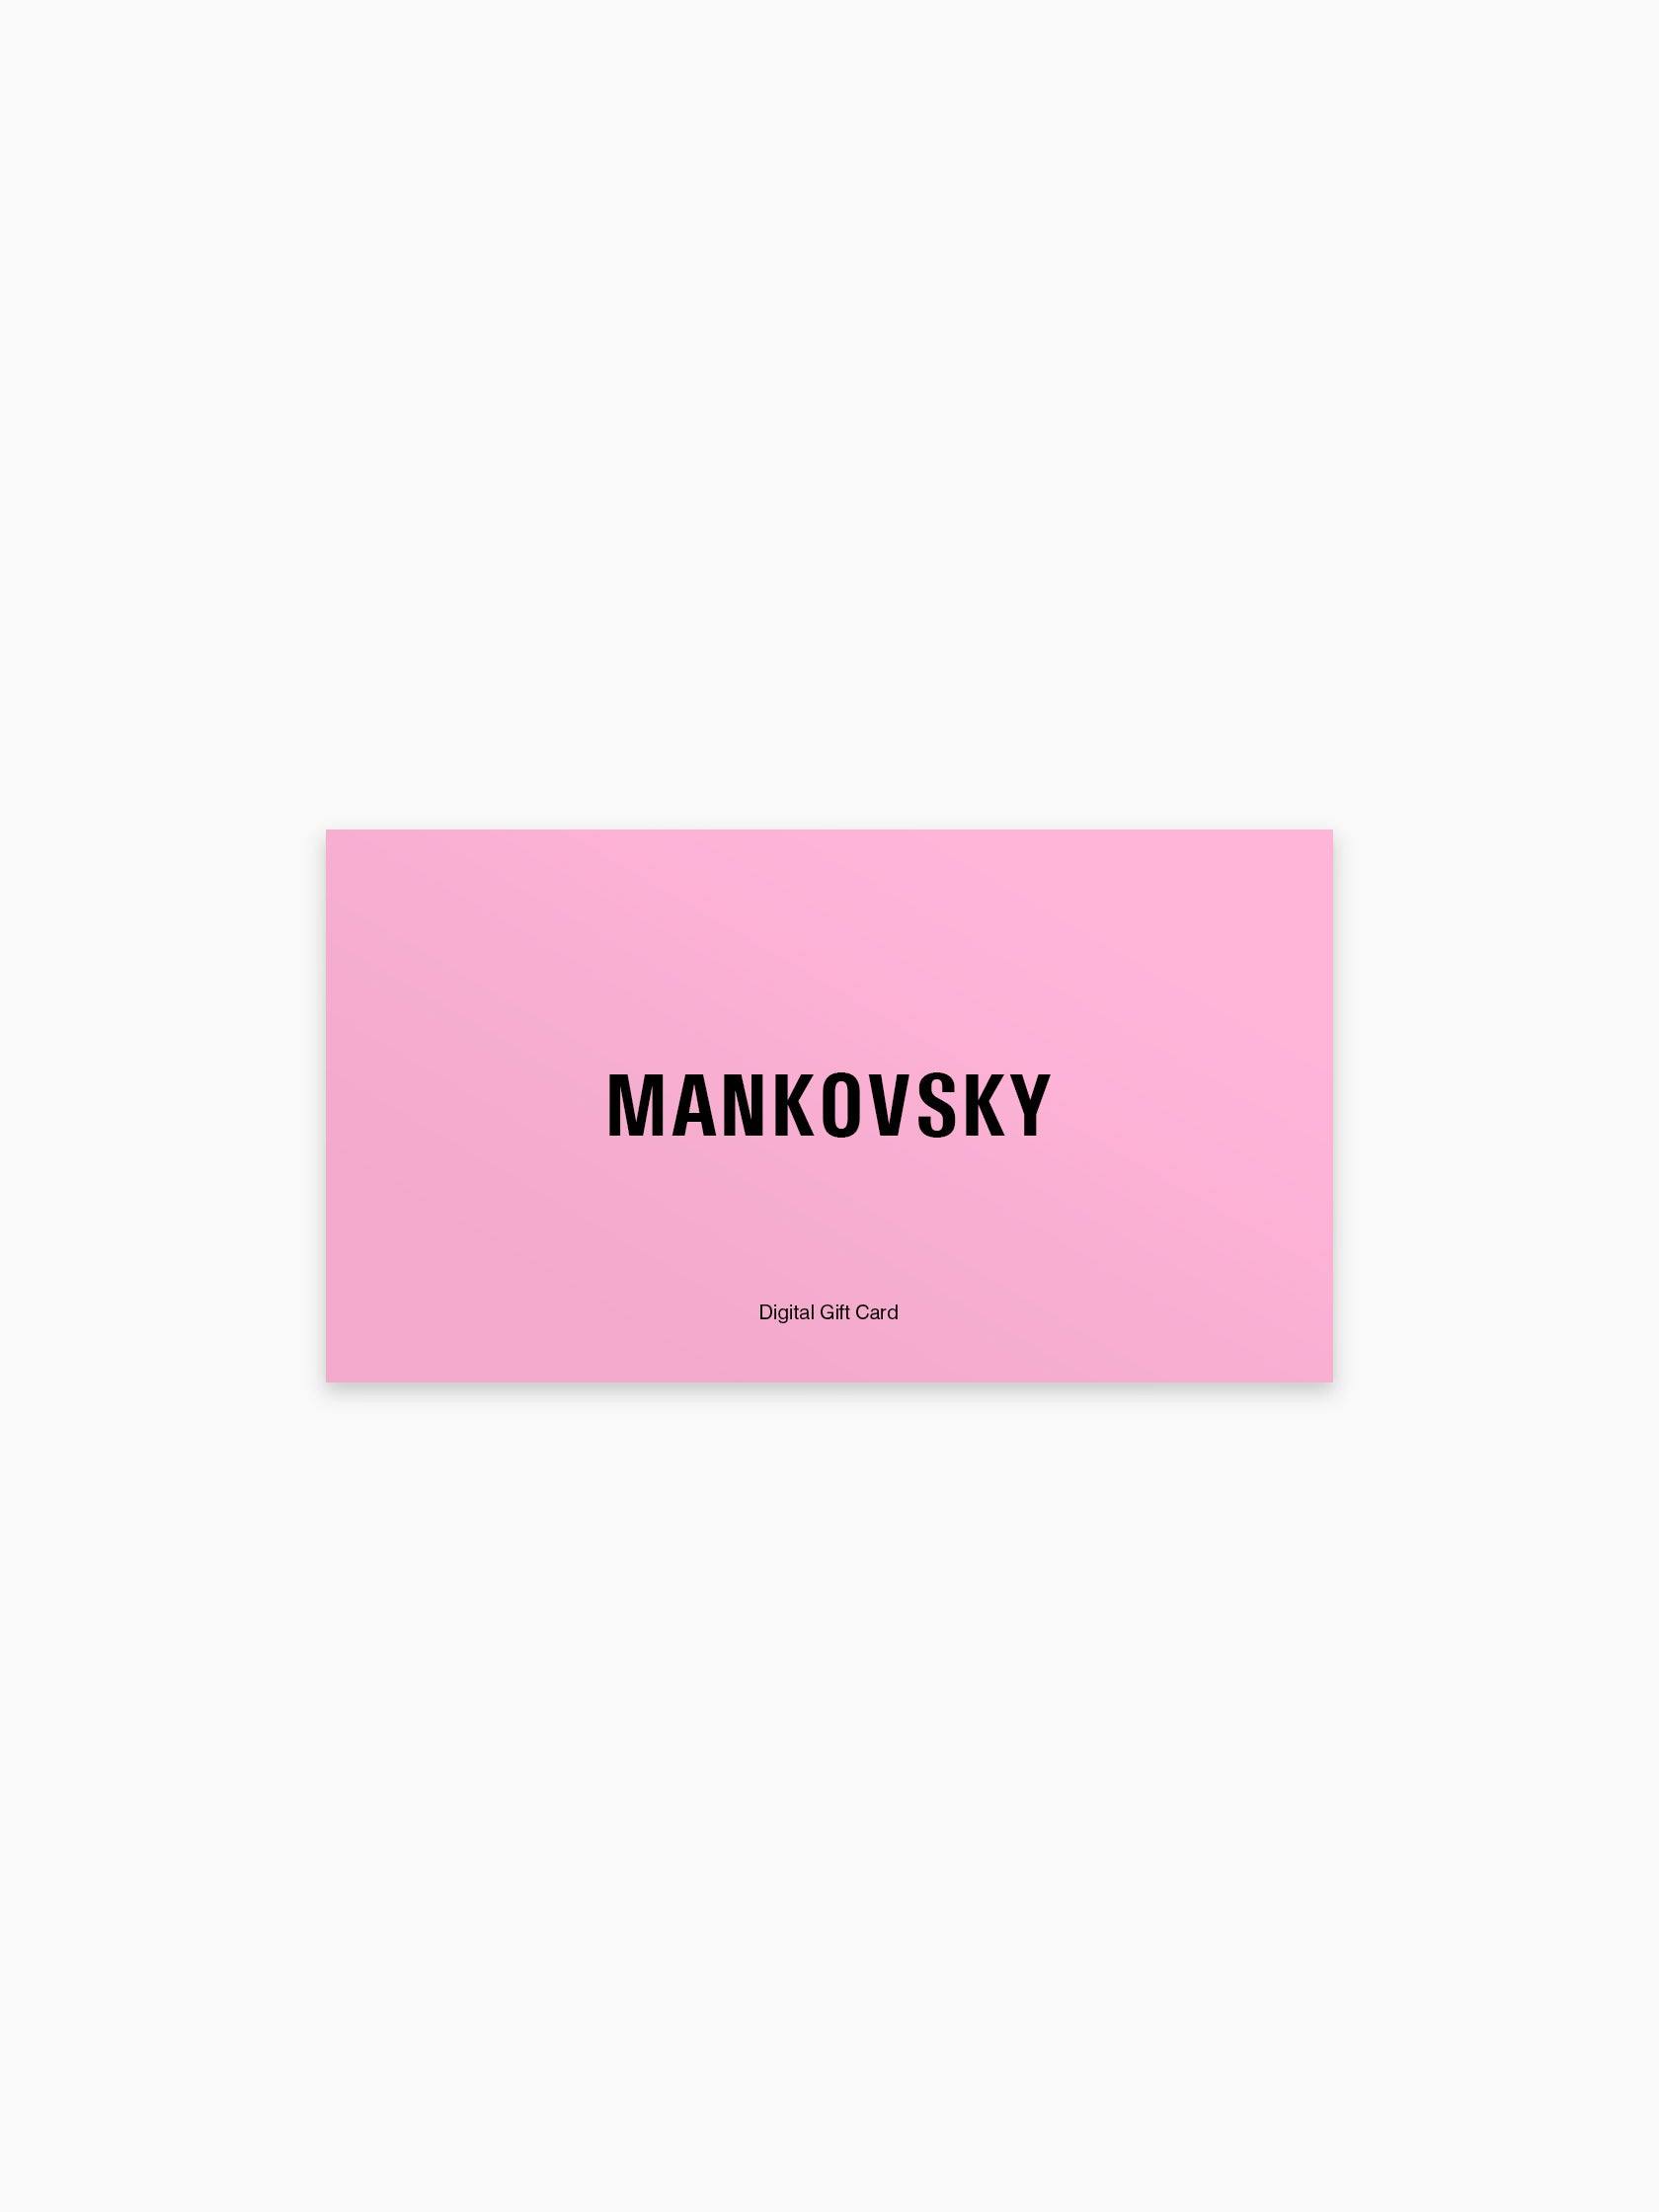 Gift Card by Mankovsky Gallery - Mankovsky Gallery